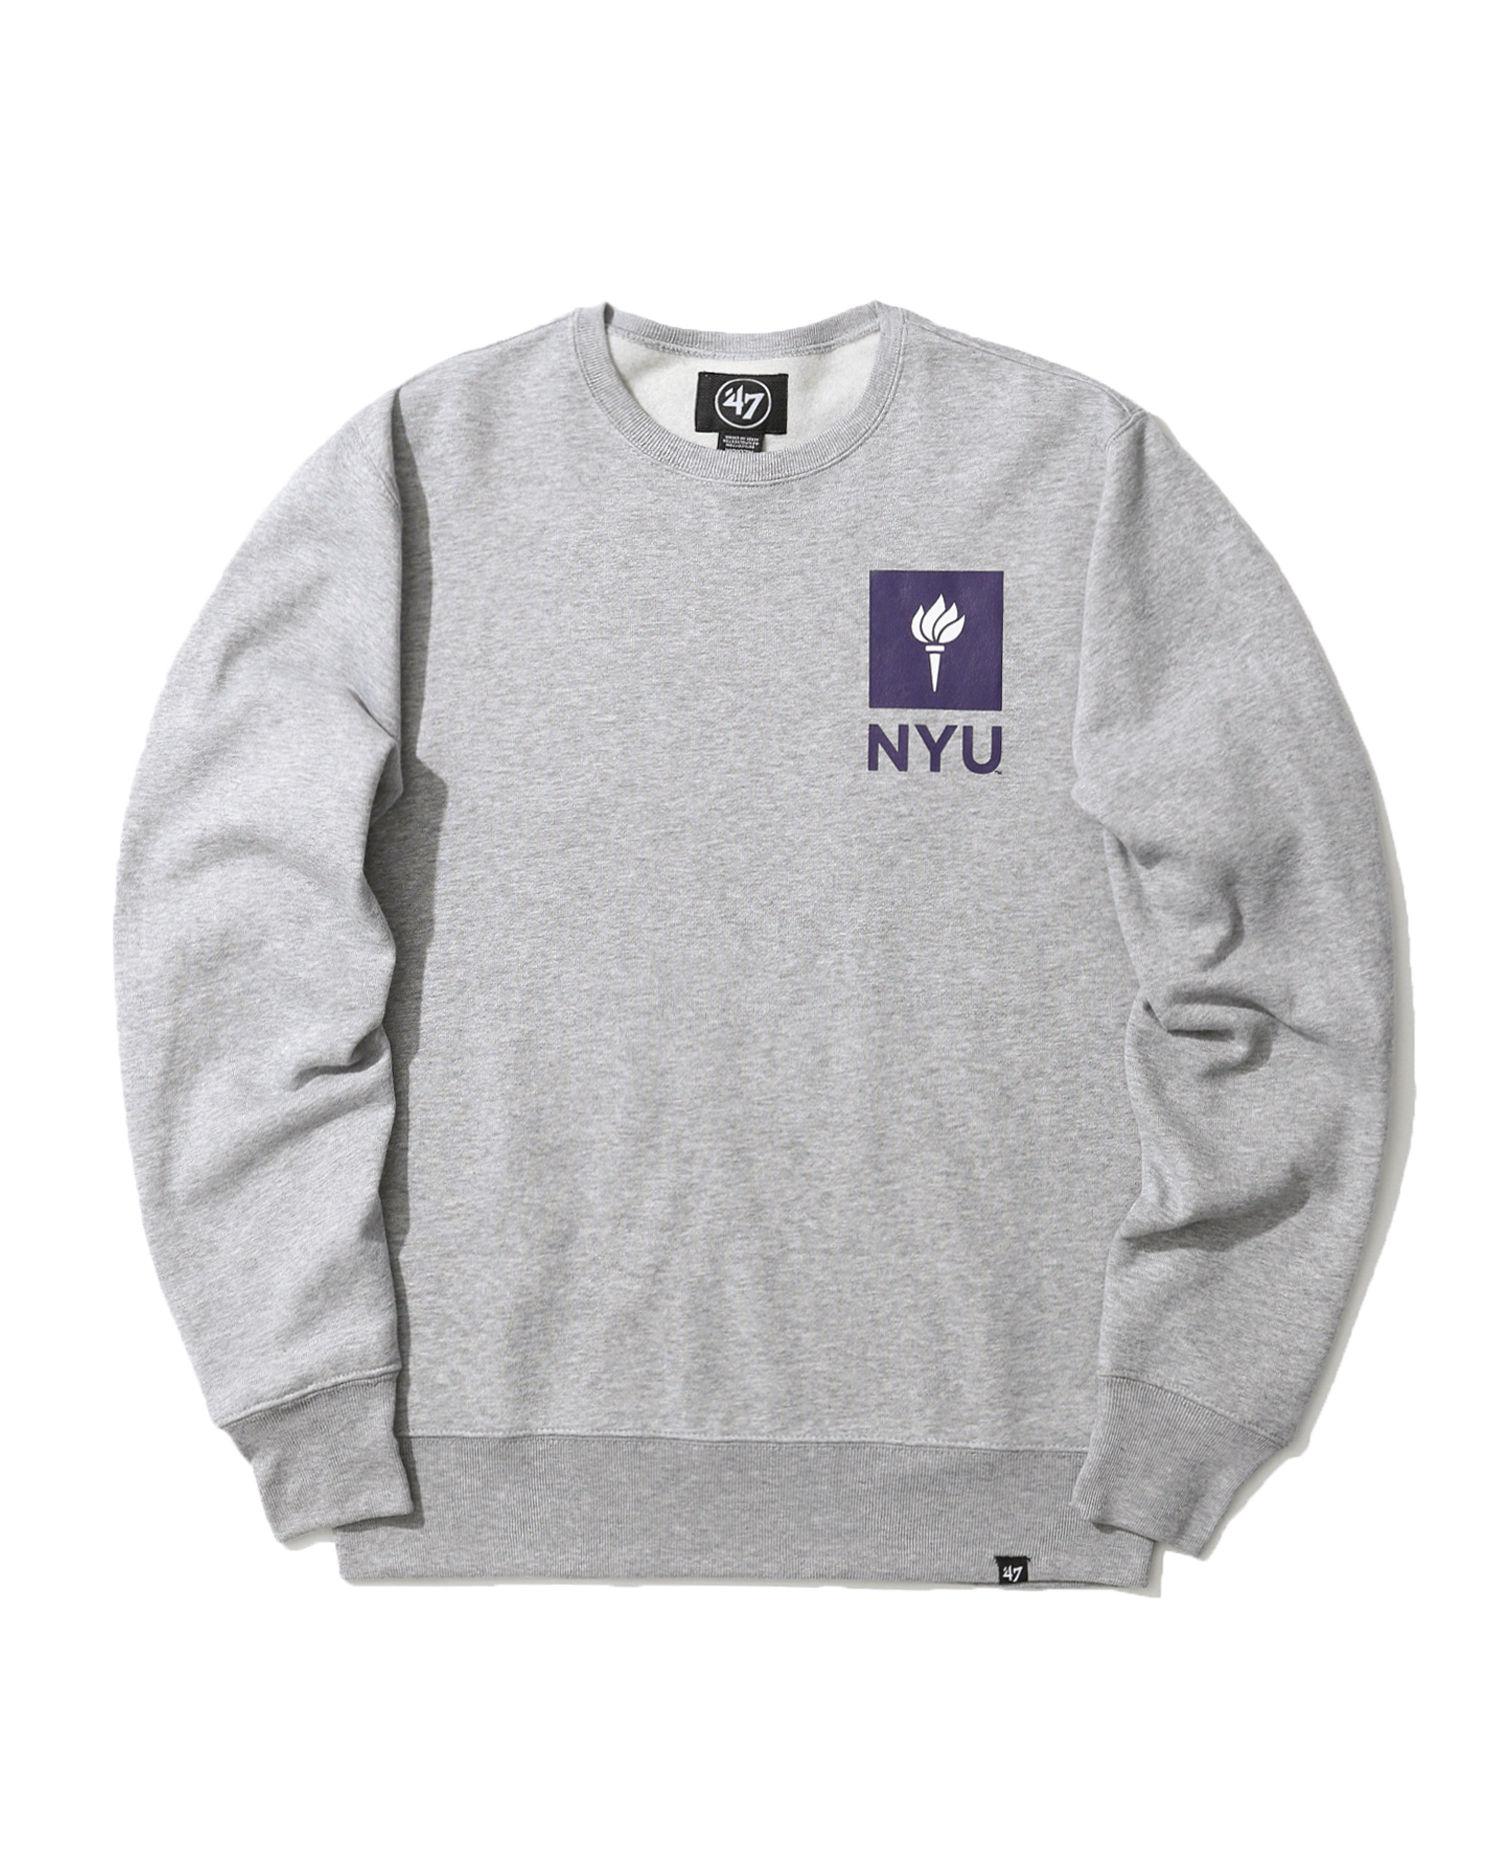 NYU sweatshirt by '47